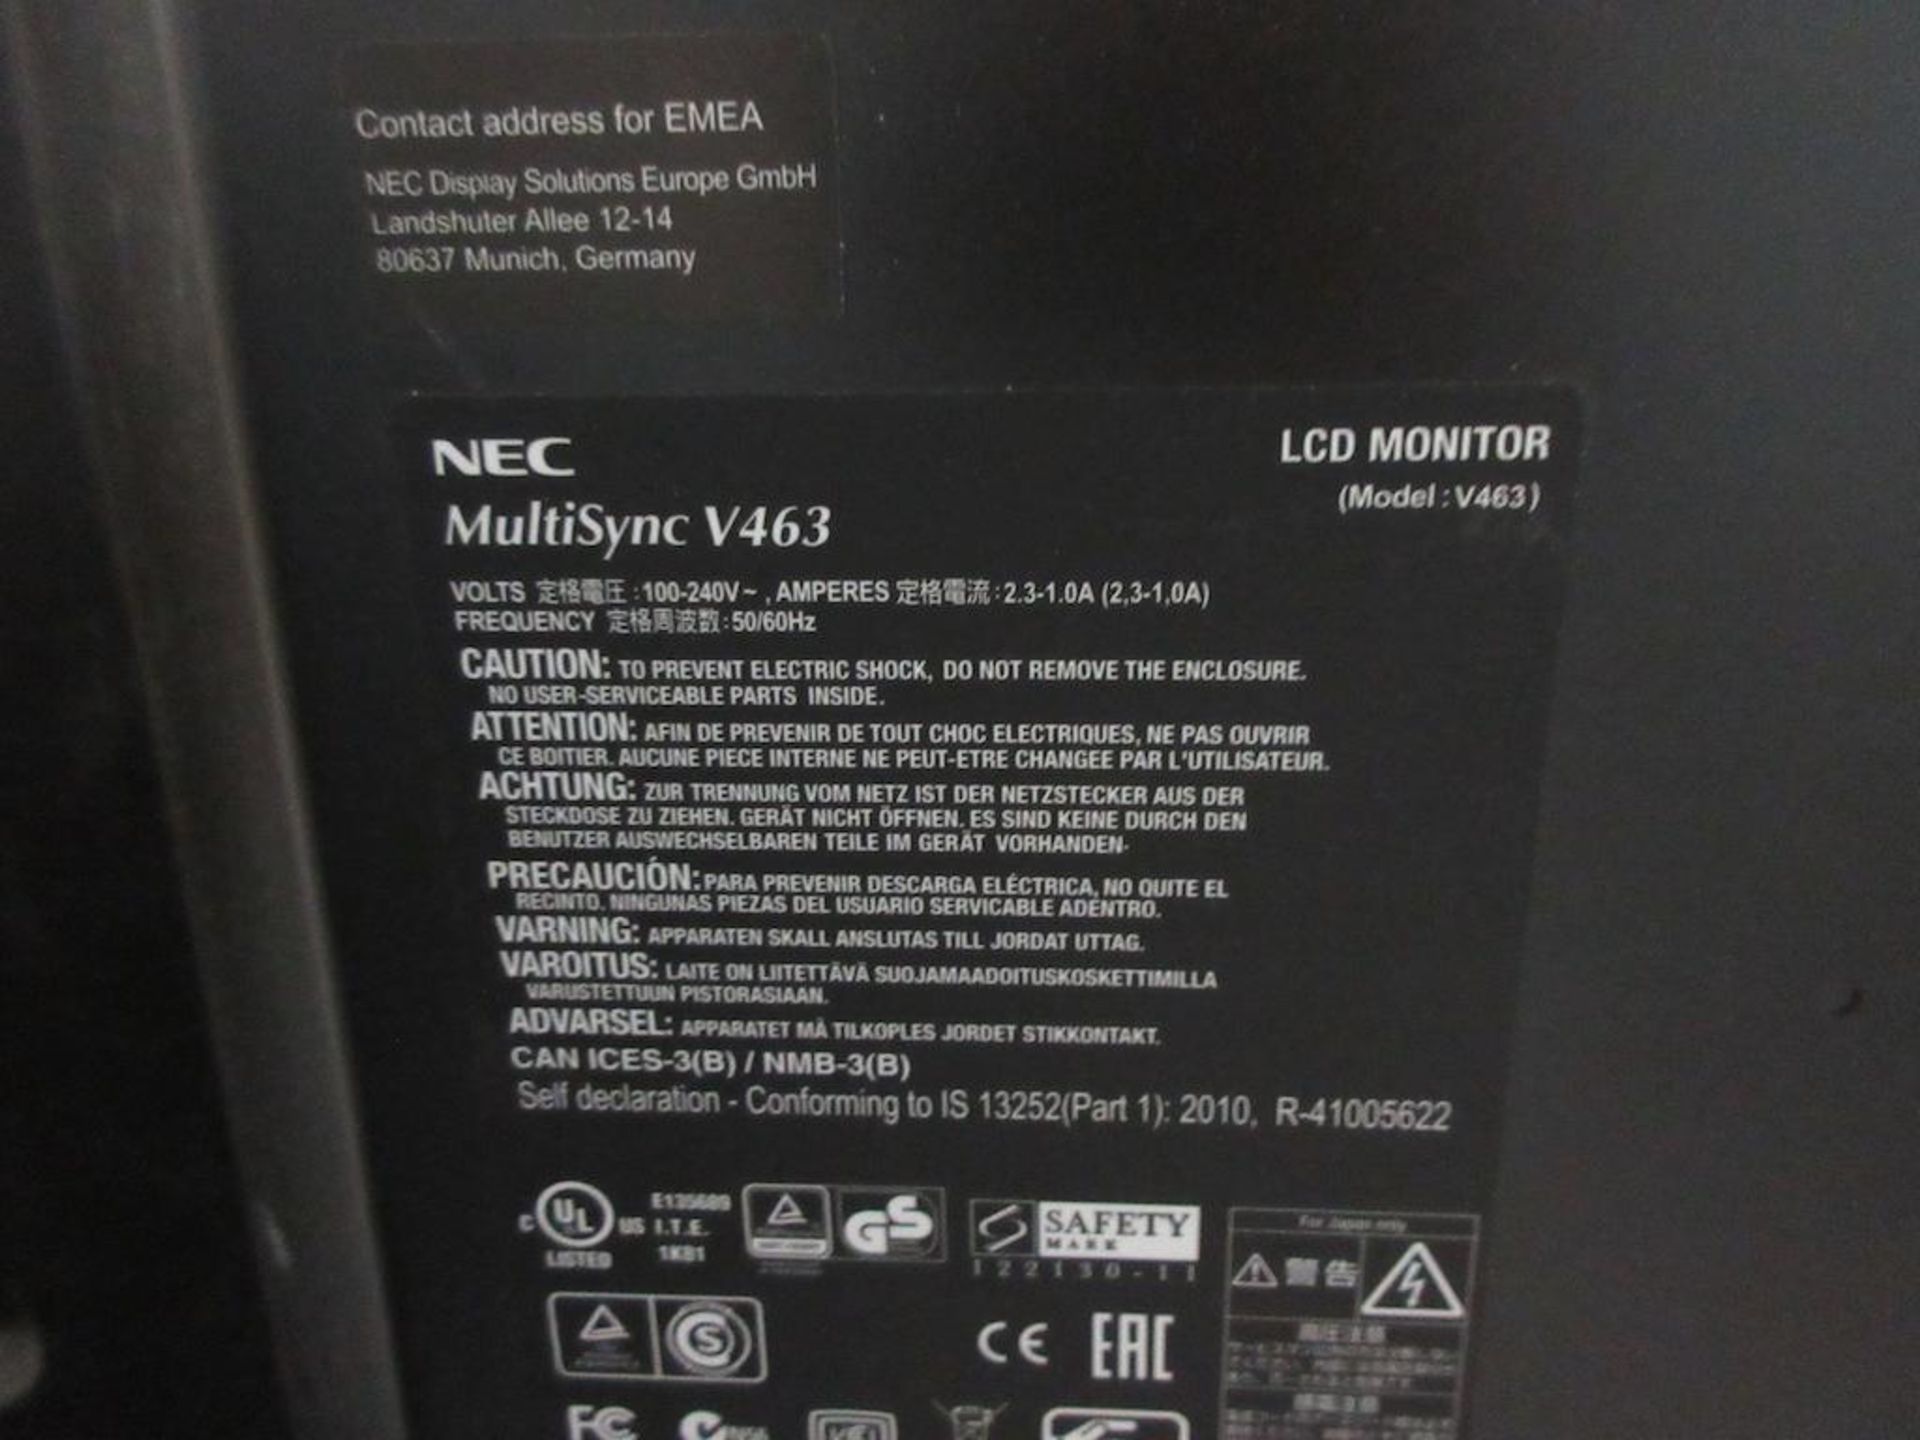 NEC multisync V463 46" LCD Monitor - Image 3 of 3